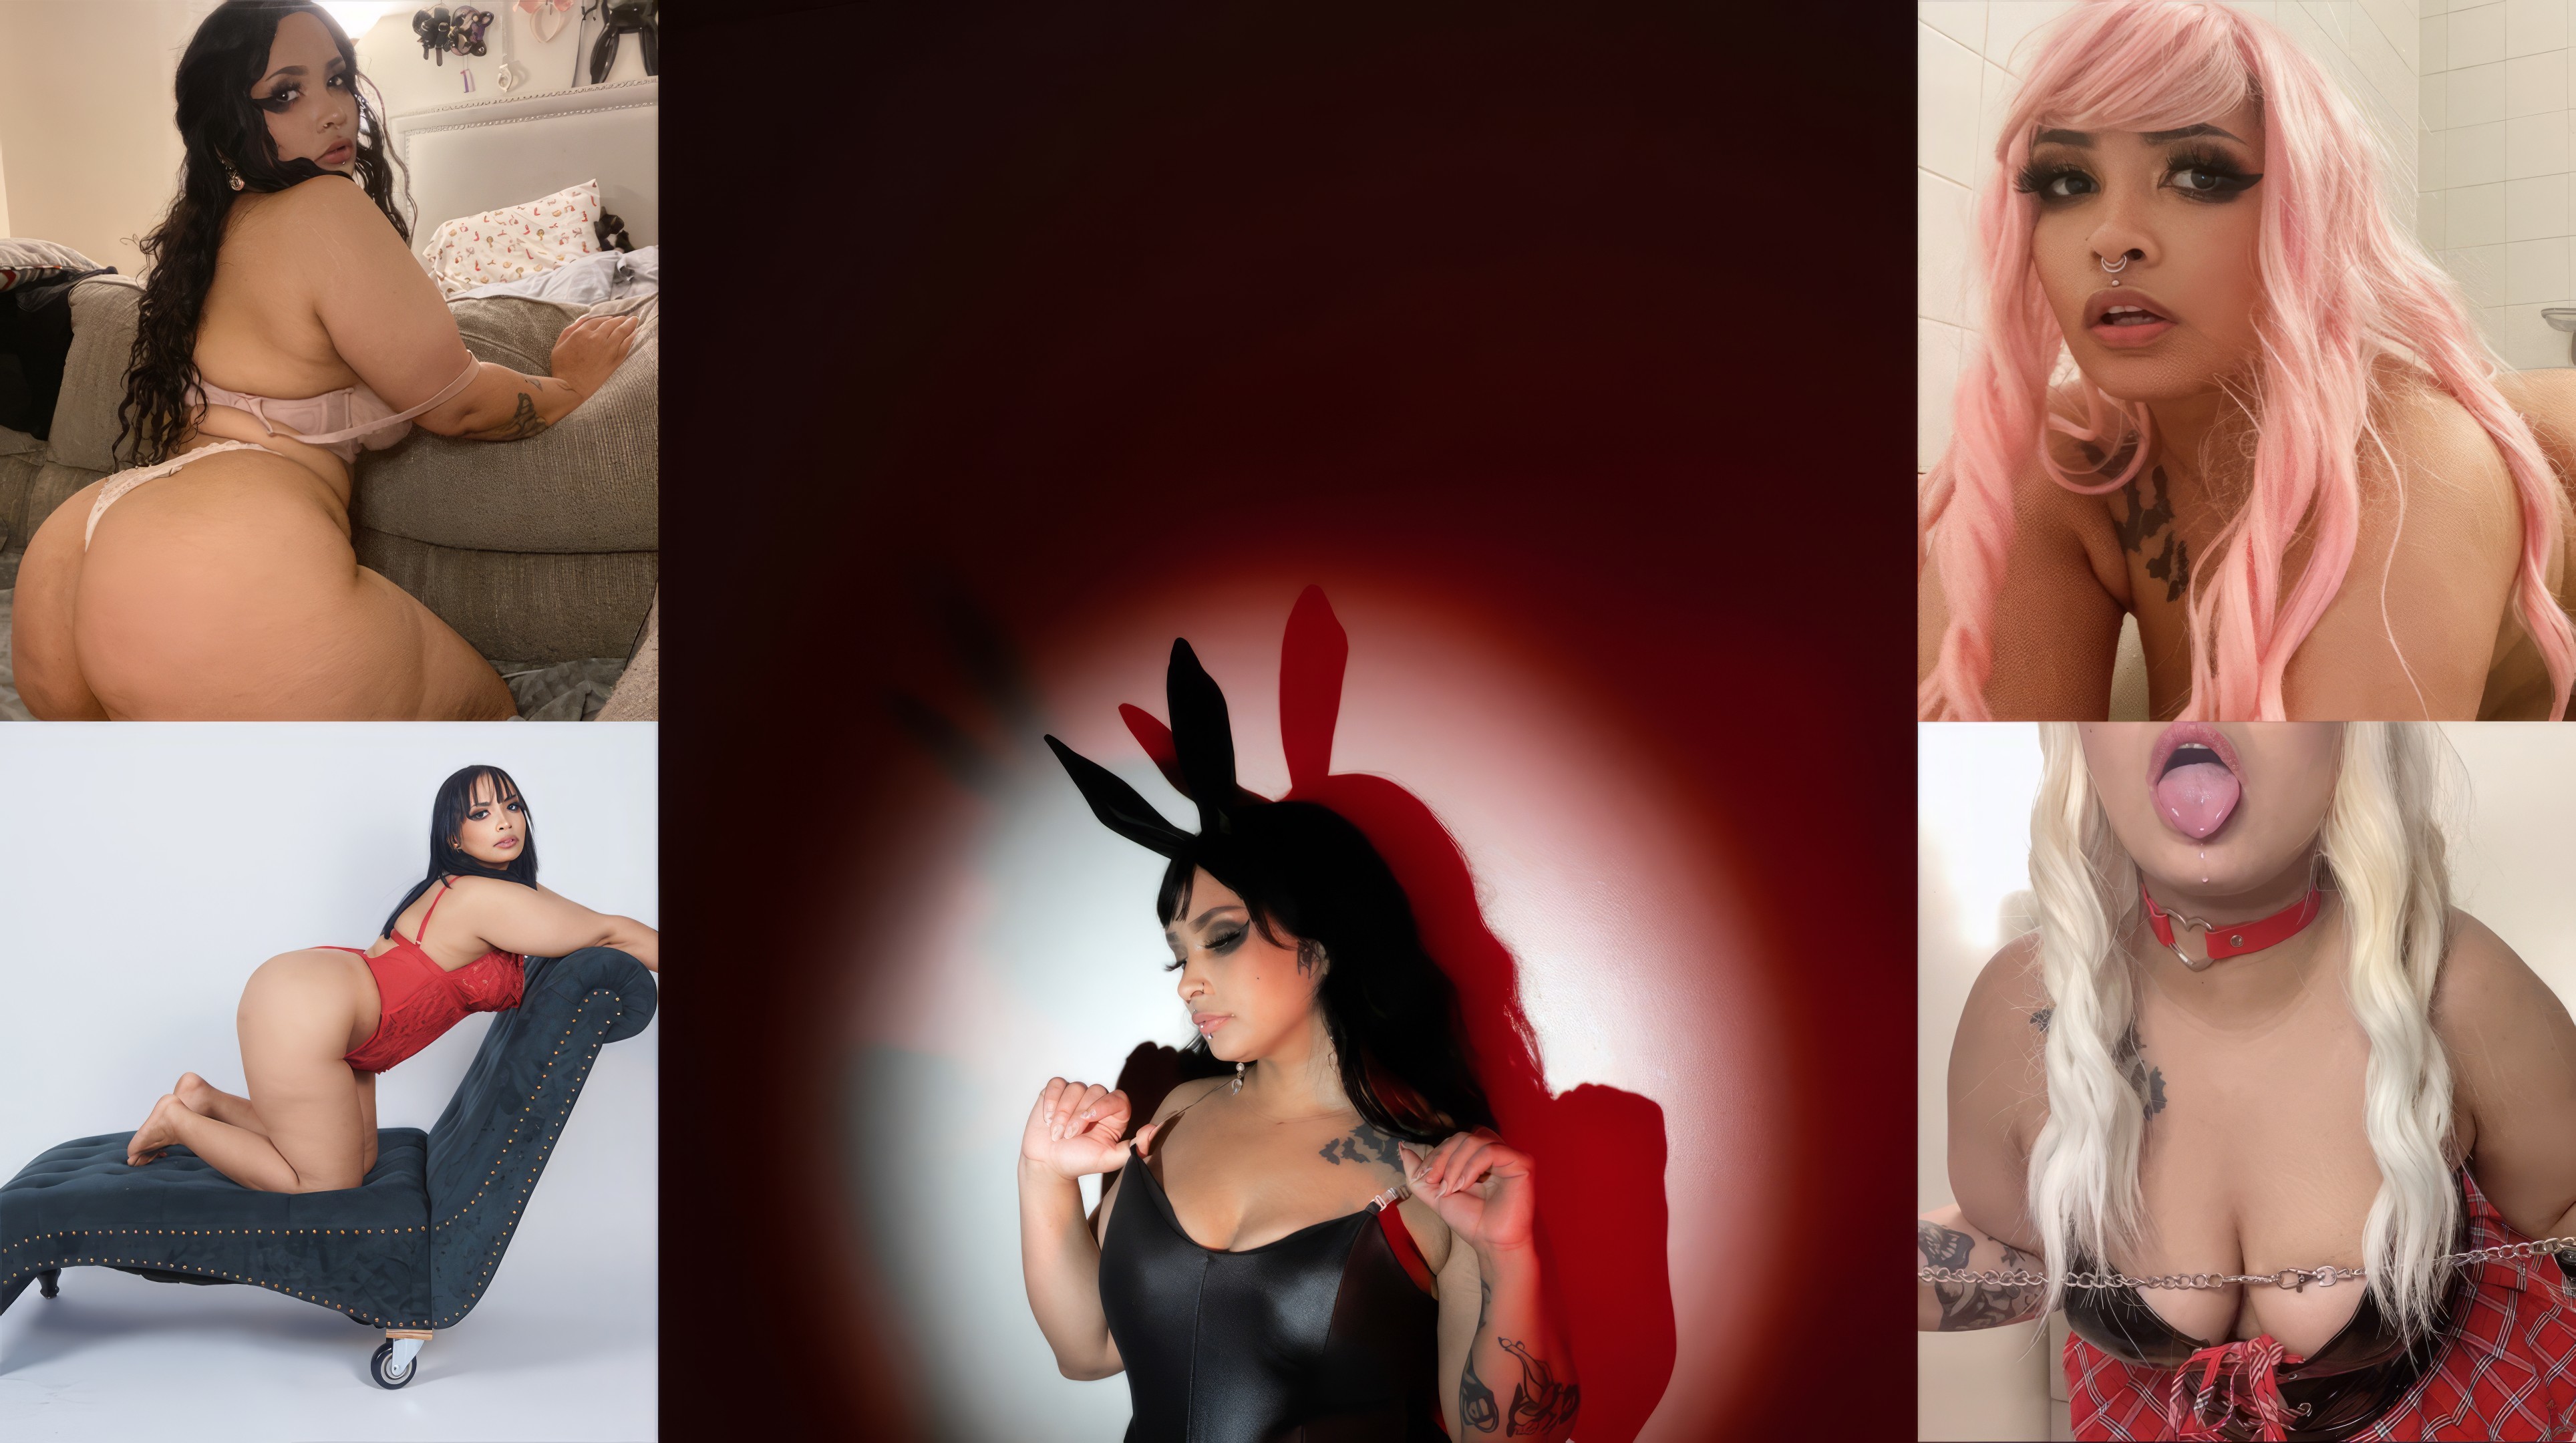 [Onlyfans.com] SunnyBunnyyyy Video Pack (391 ролик) (PuffyBunniee) [2023, Amateur, Anal, BBW, Big Ass, Big Tits, Blowjob, Creampie, Dildo, Facial, Hardcore, Latex, Lingerie, Latina, Lesbian, Masturbation, Natural Tits, Posing, Softcore, Solo, Titfuck